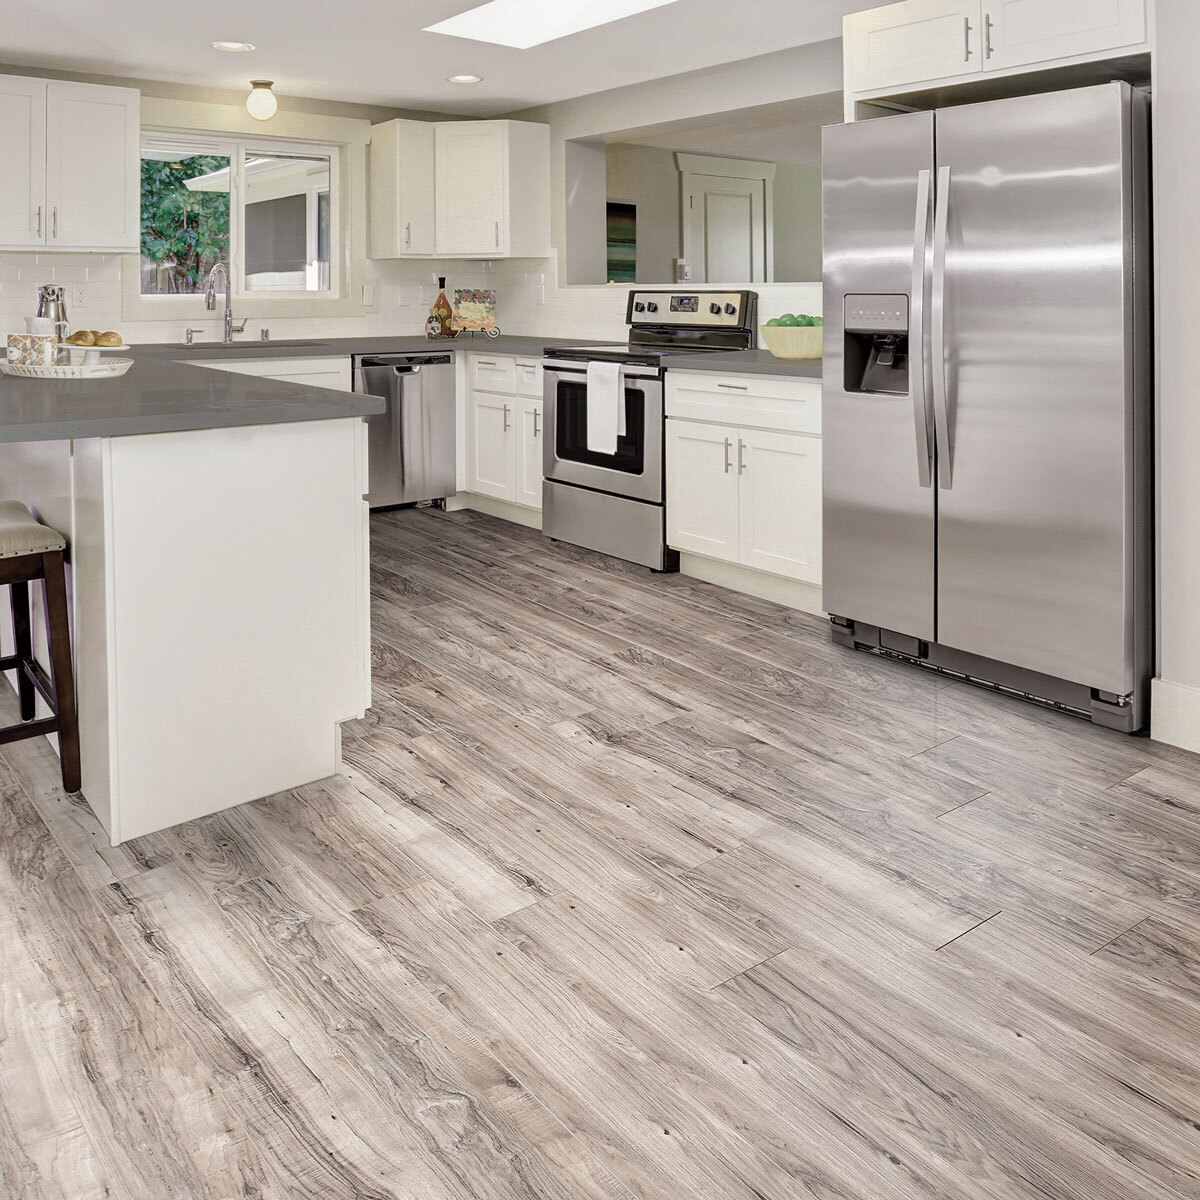 Golden Select Grey Walnut Splash, Pictures Of Laminate Flooring In Kitchen